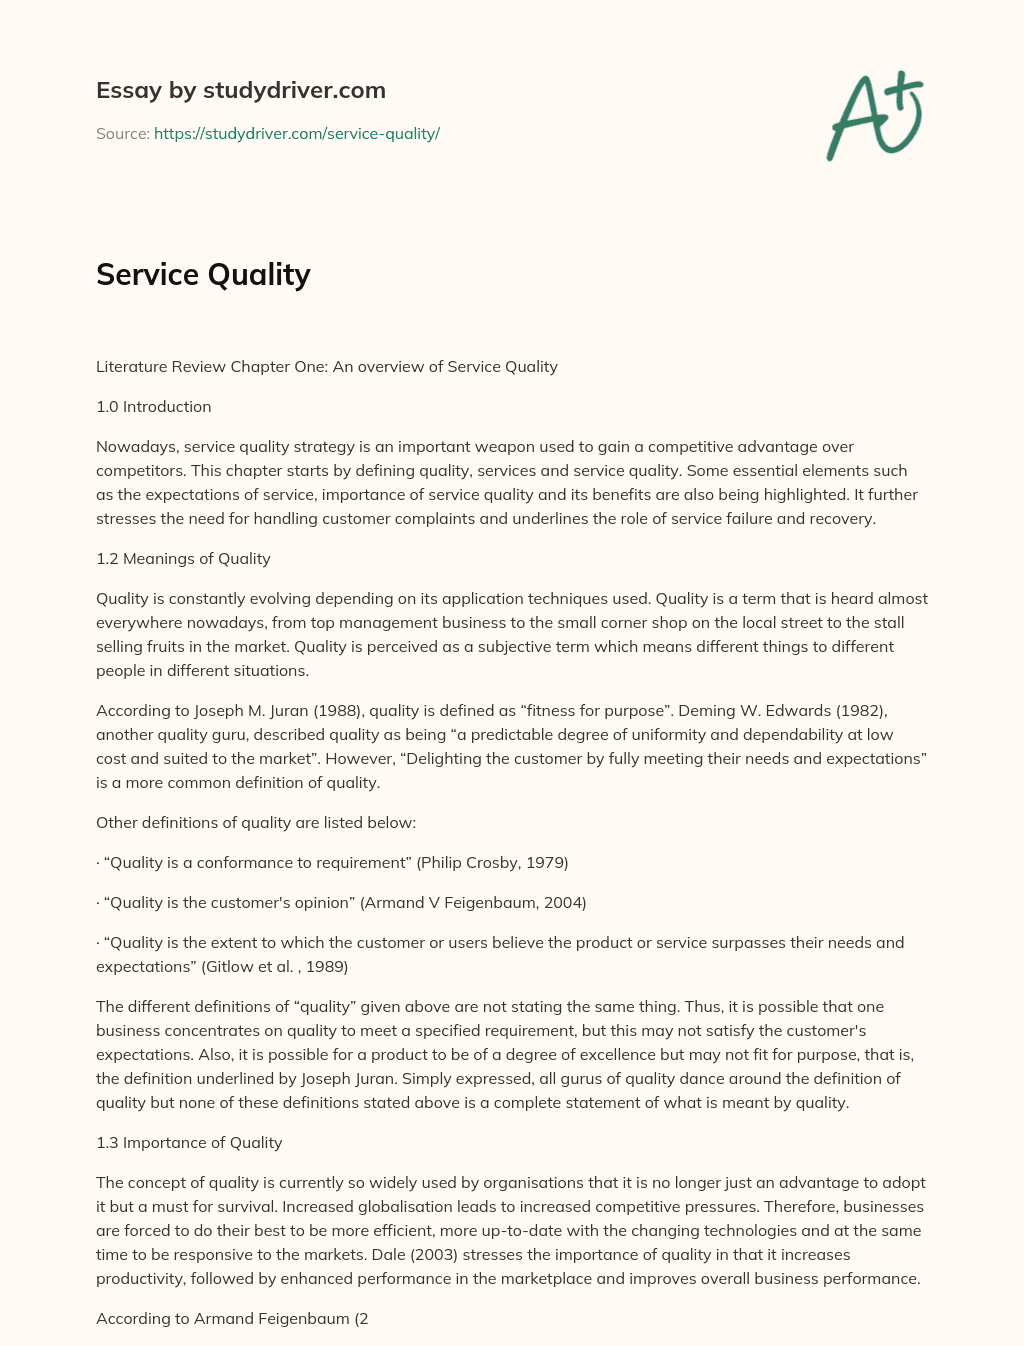 service quality essay